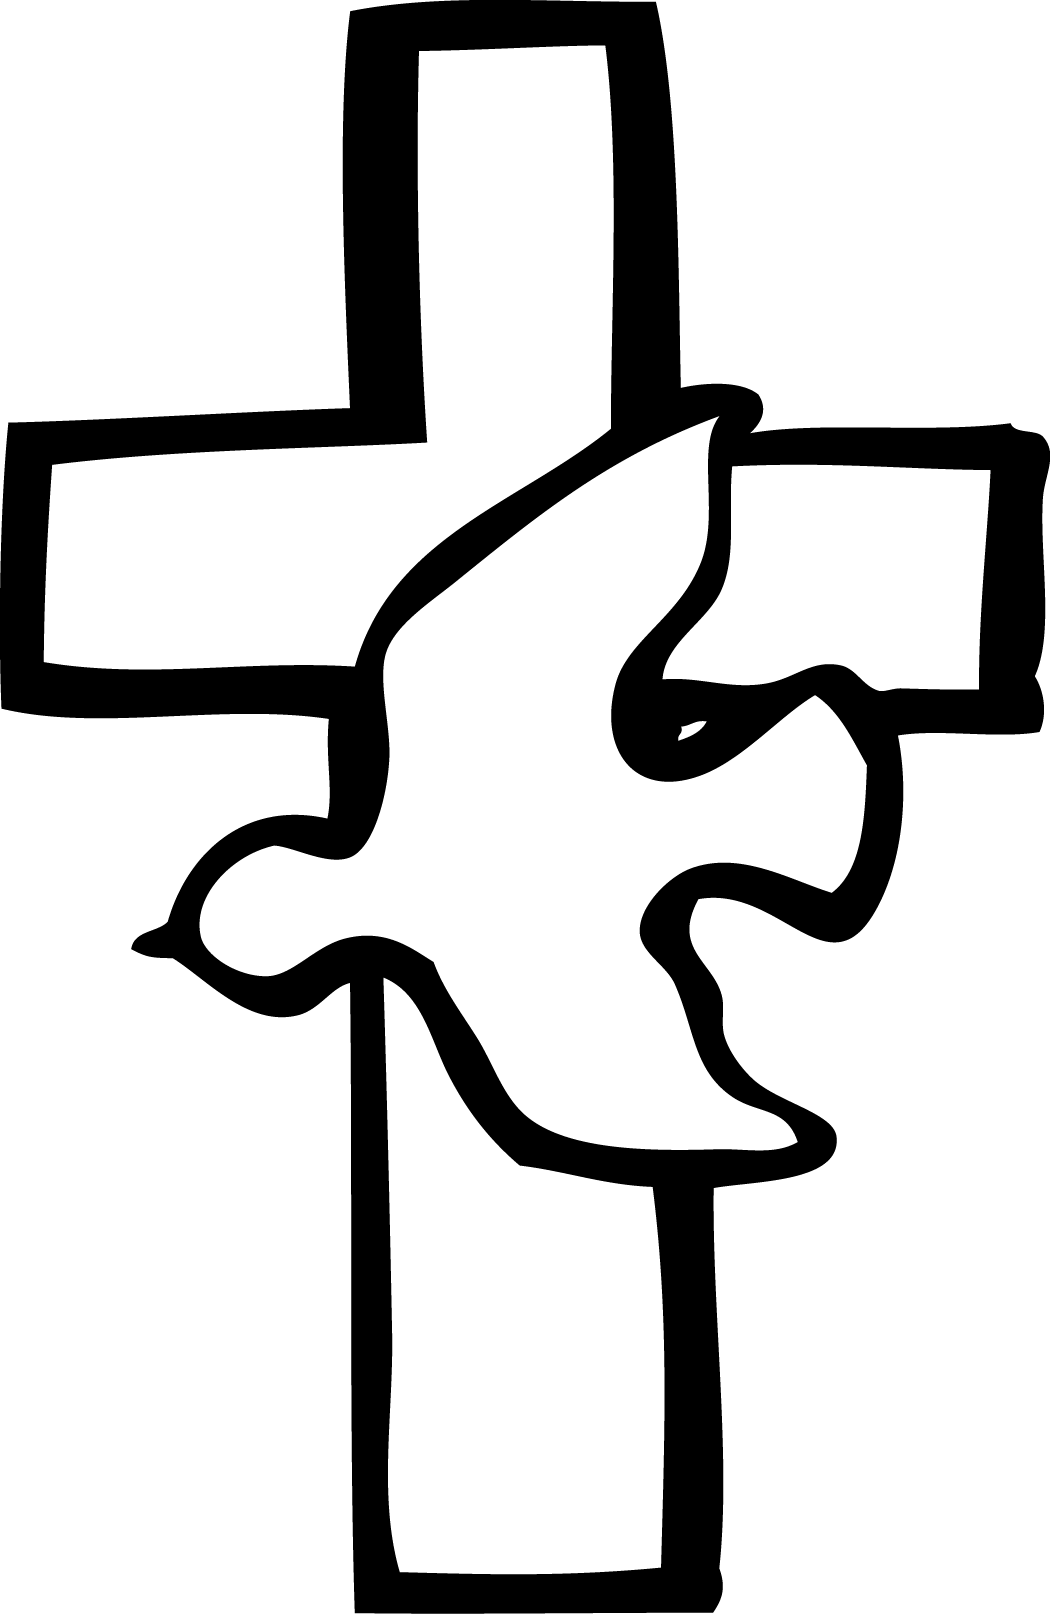 Black and White Christian Cro